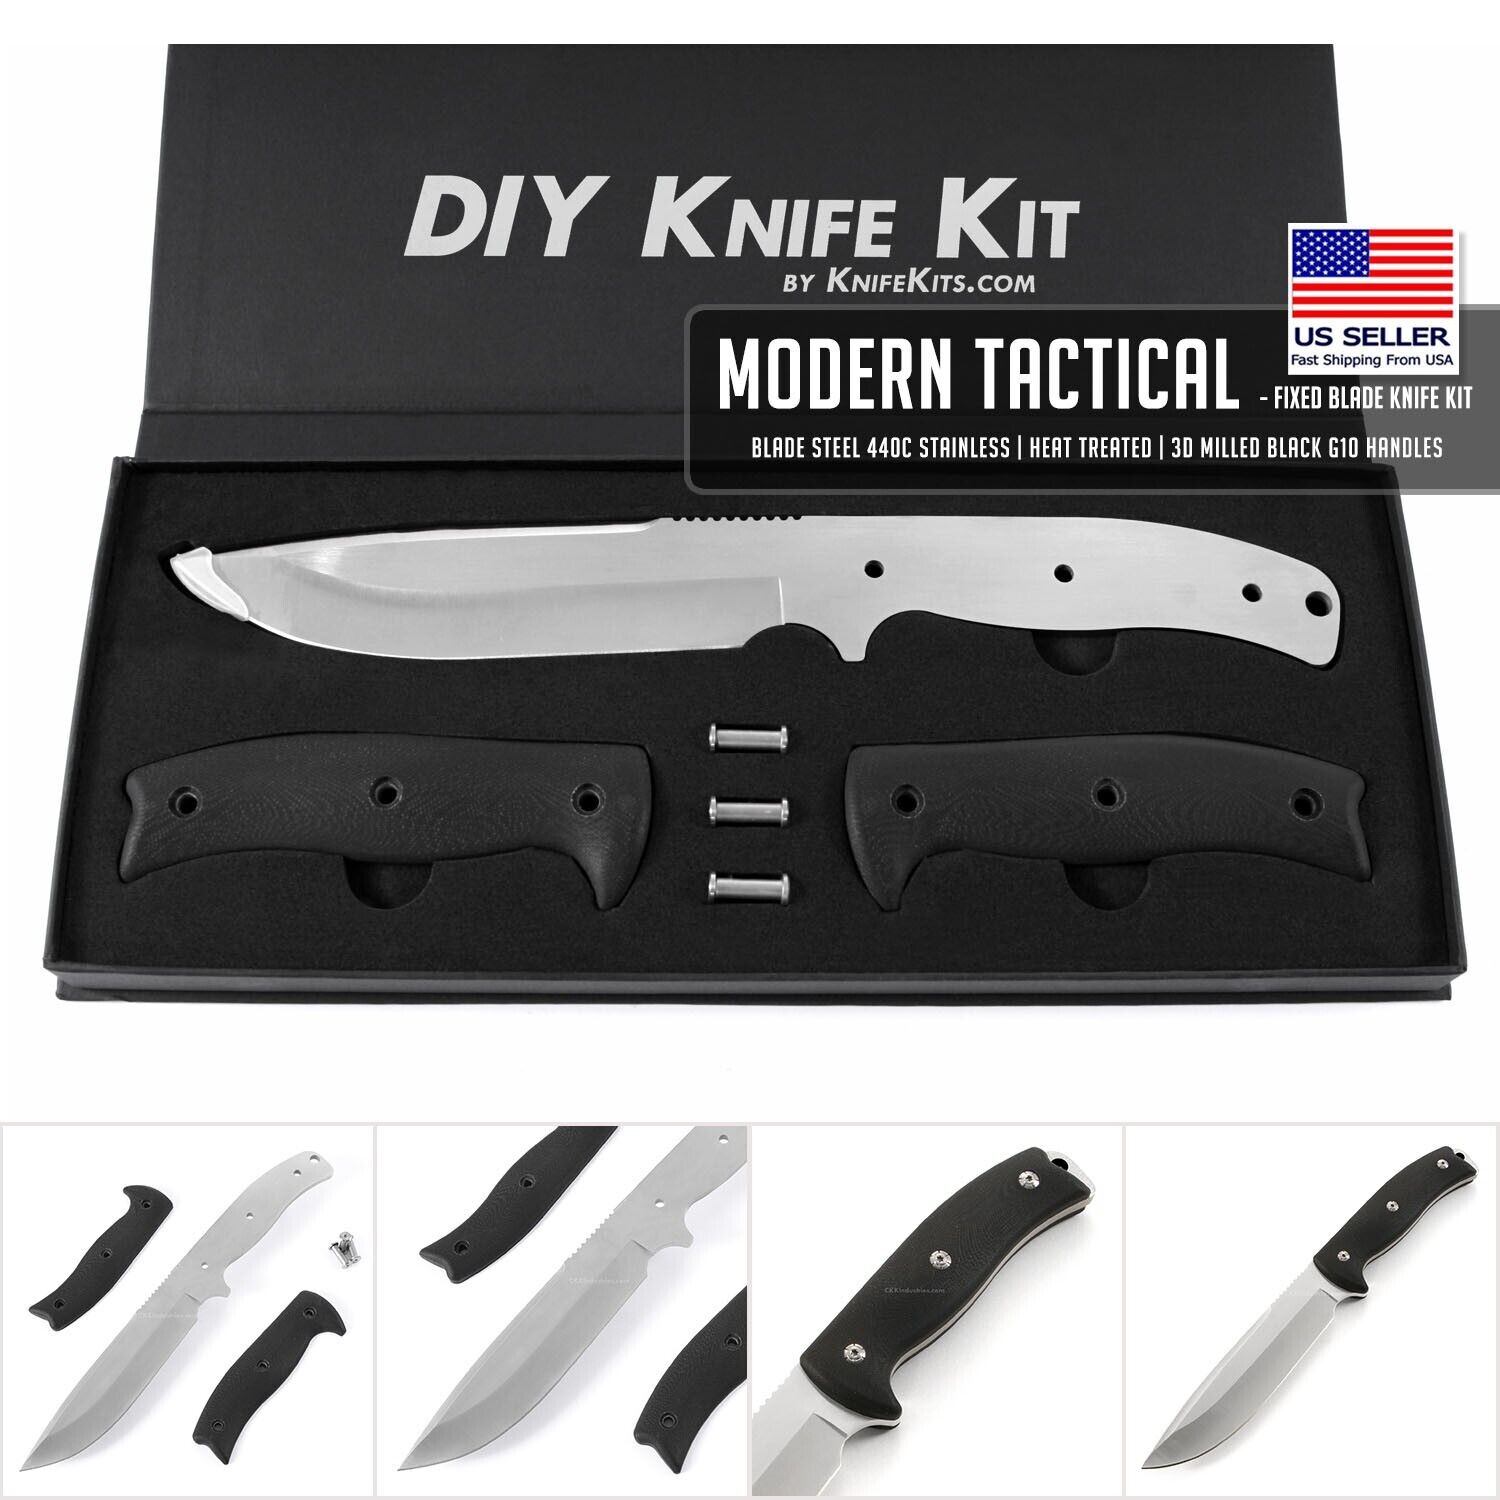 MODERN TACTICAL - DIY Knife Making Kit - USA Design